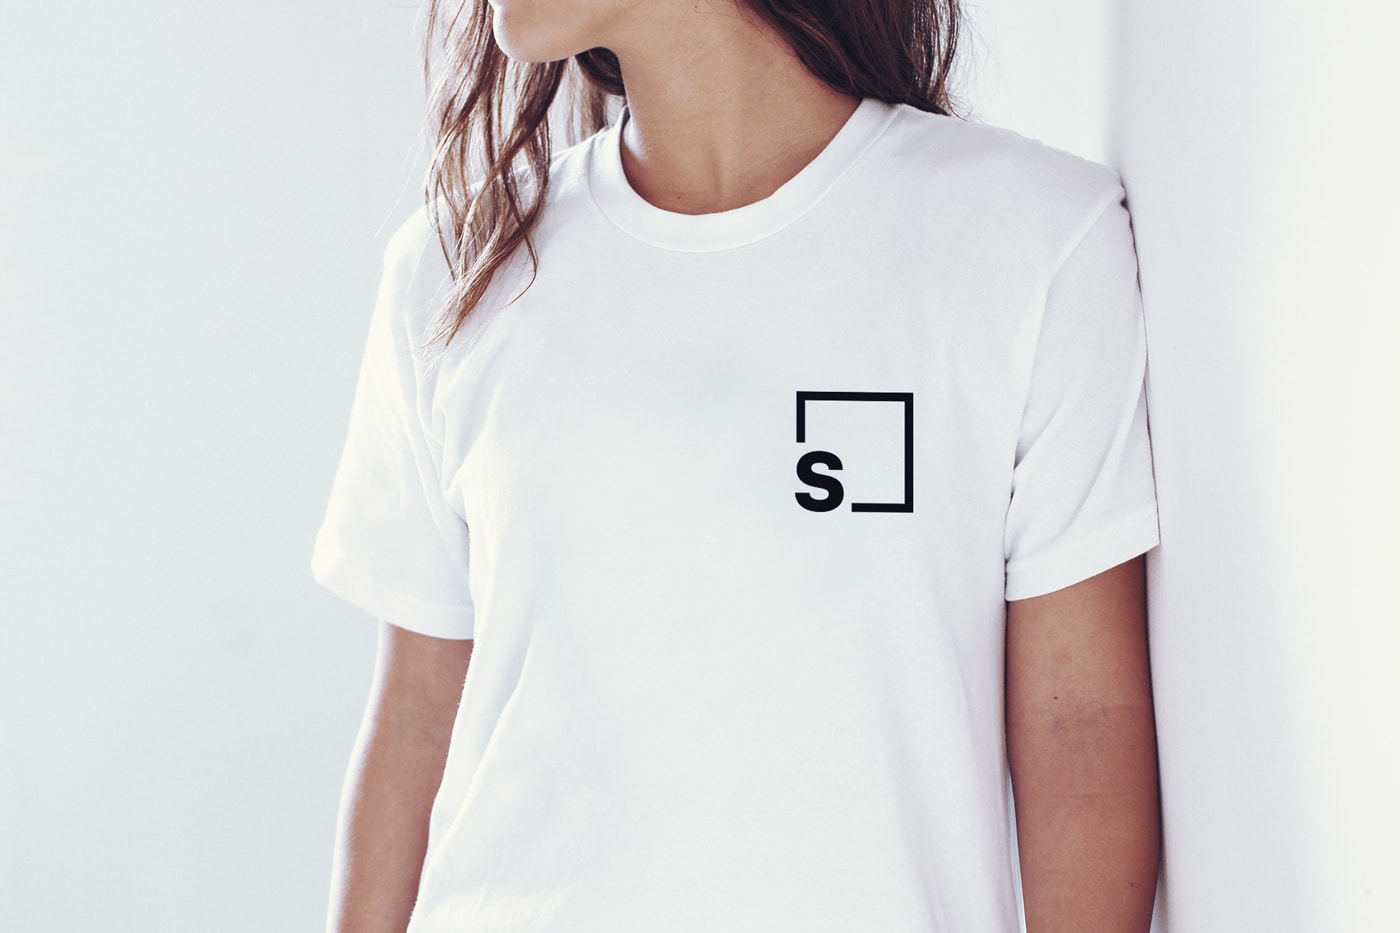 Eventzentrum Strohofer T-Shirt Design